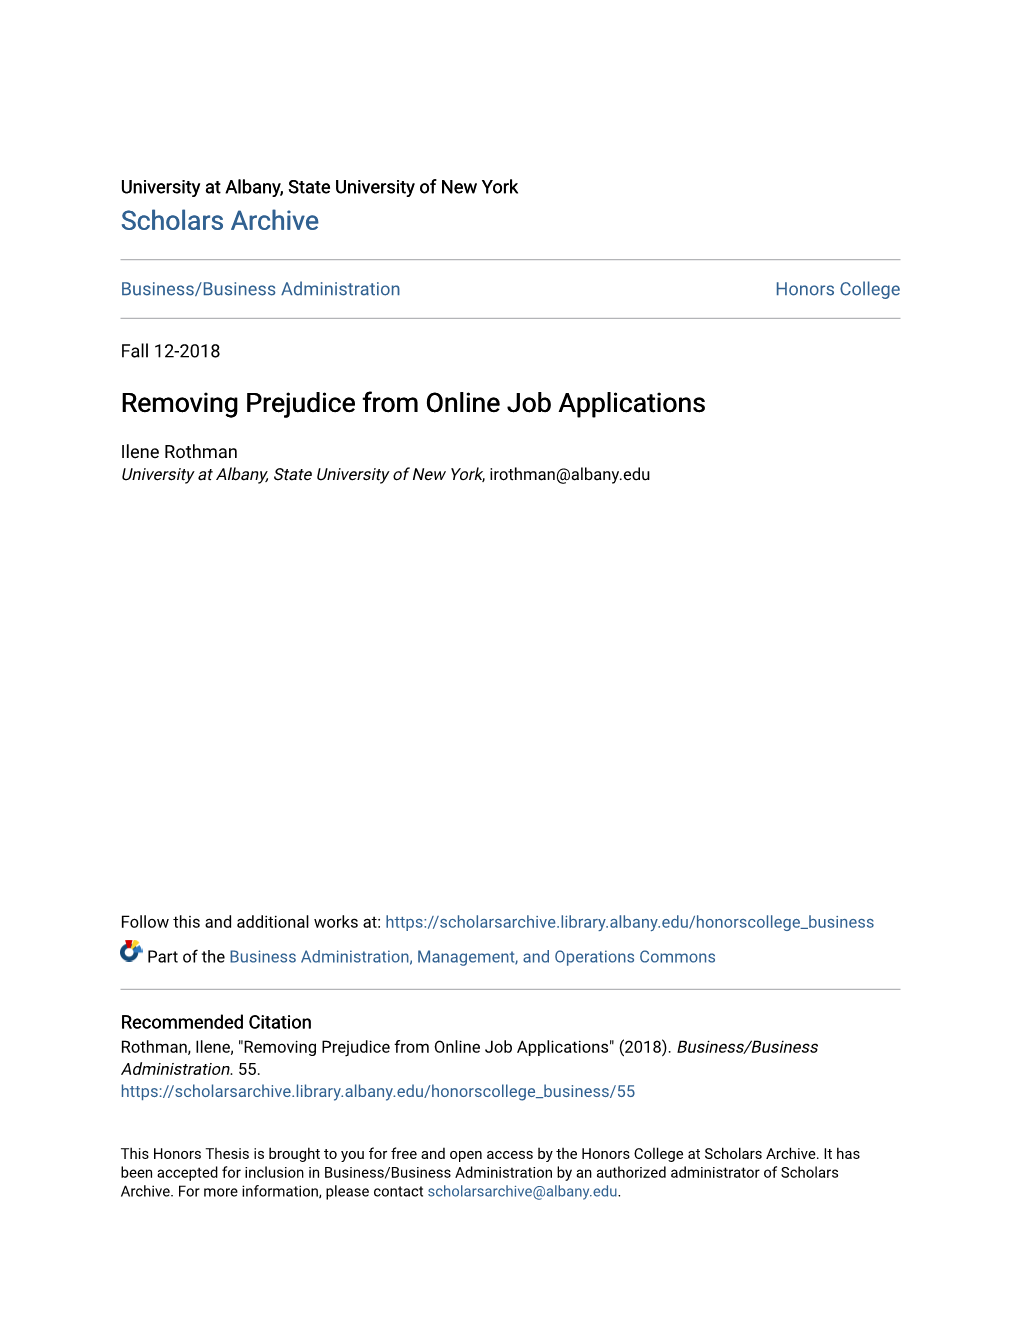 Removing Prejudice from Online Job Applications